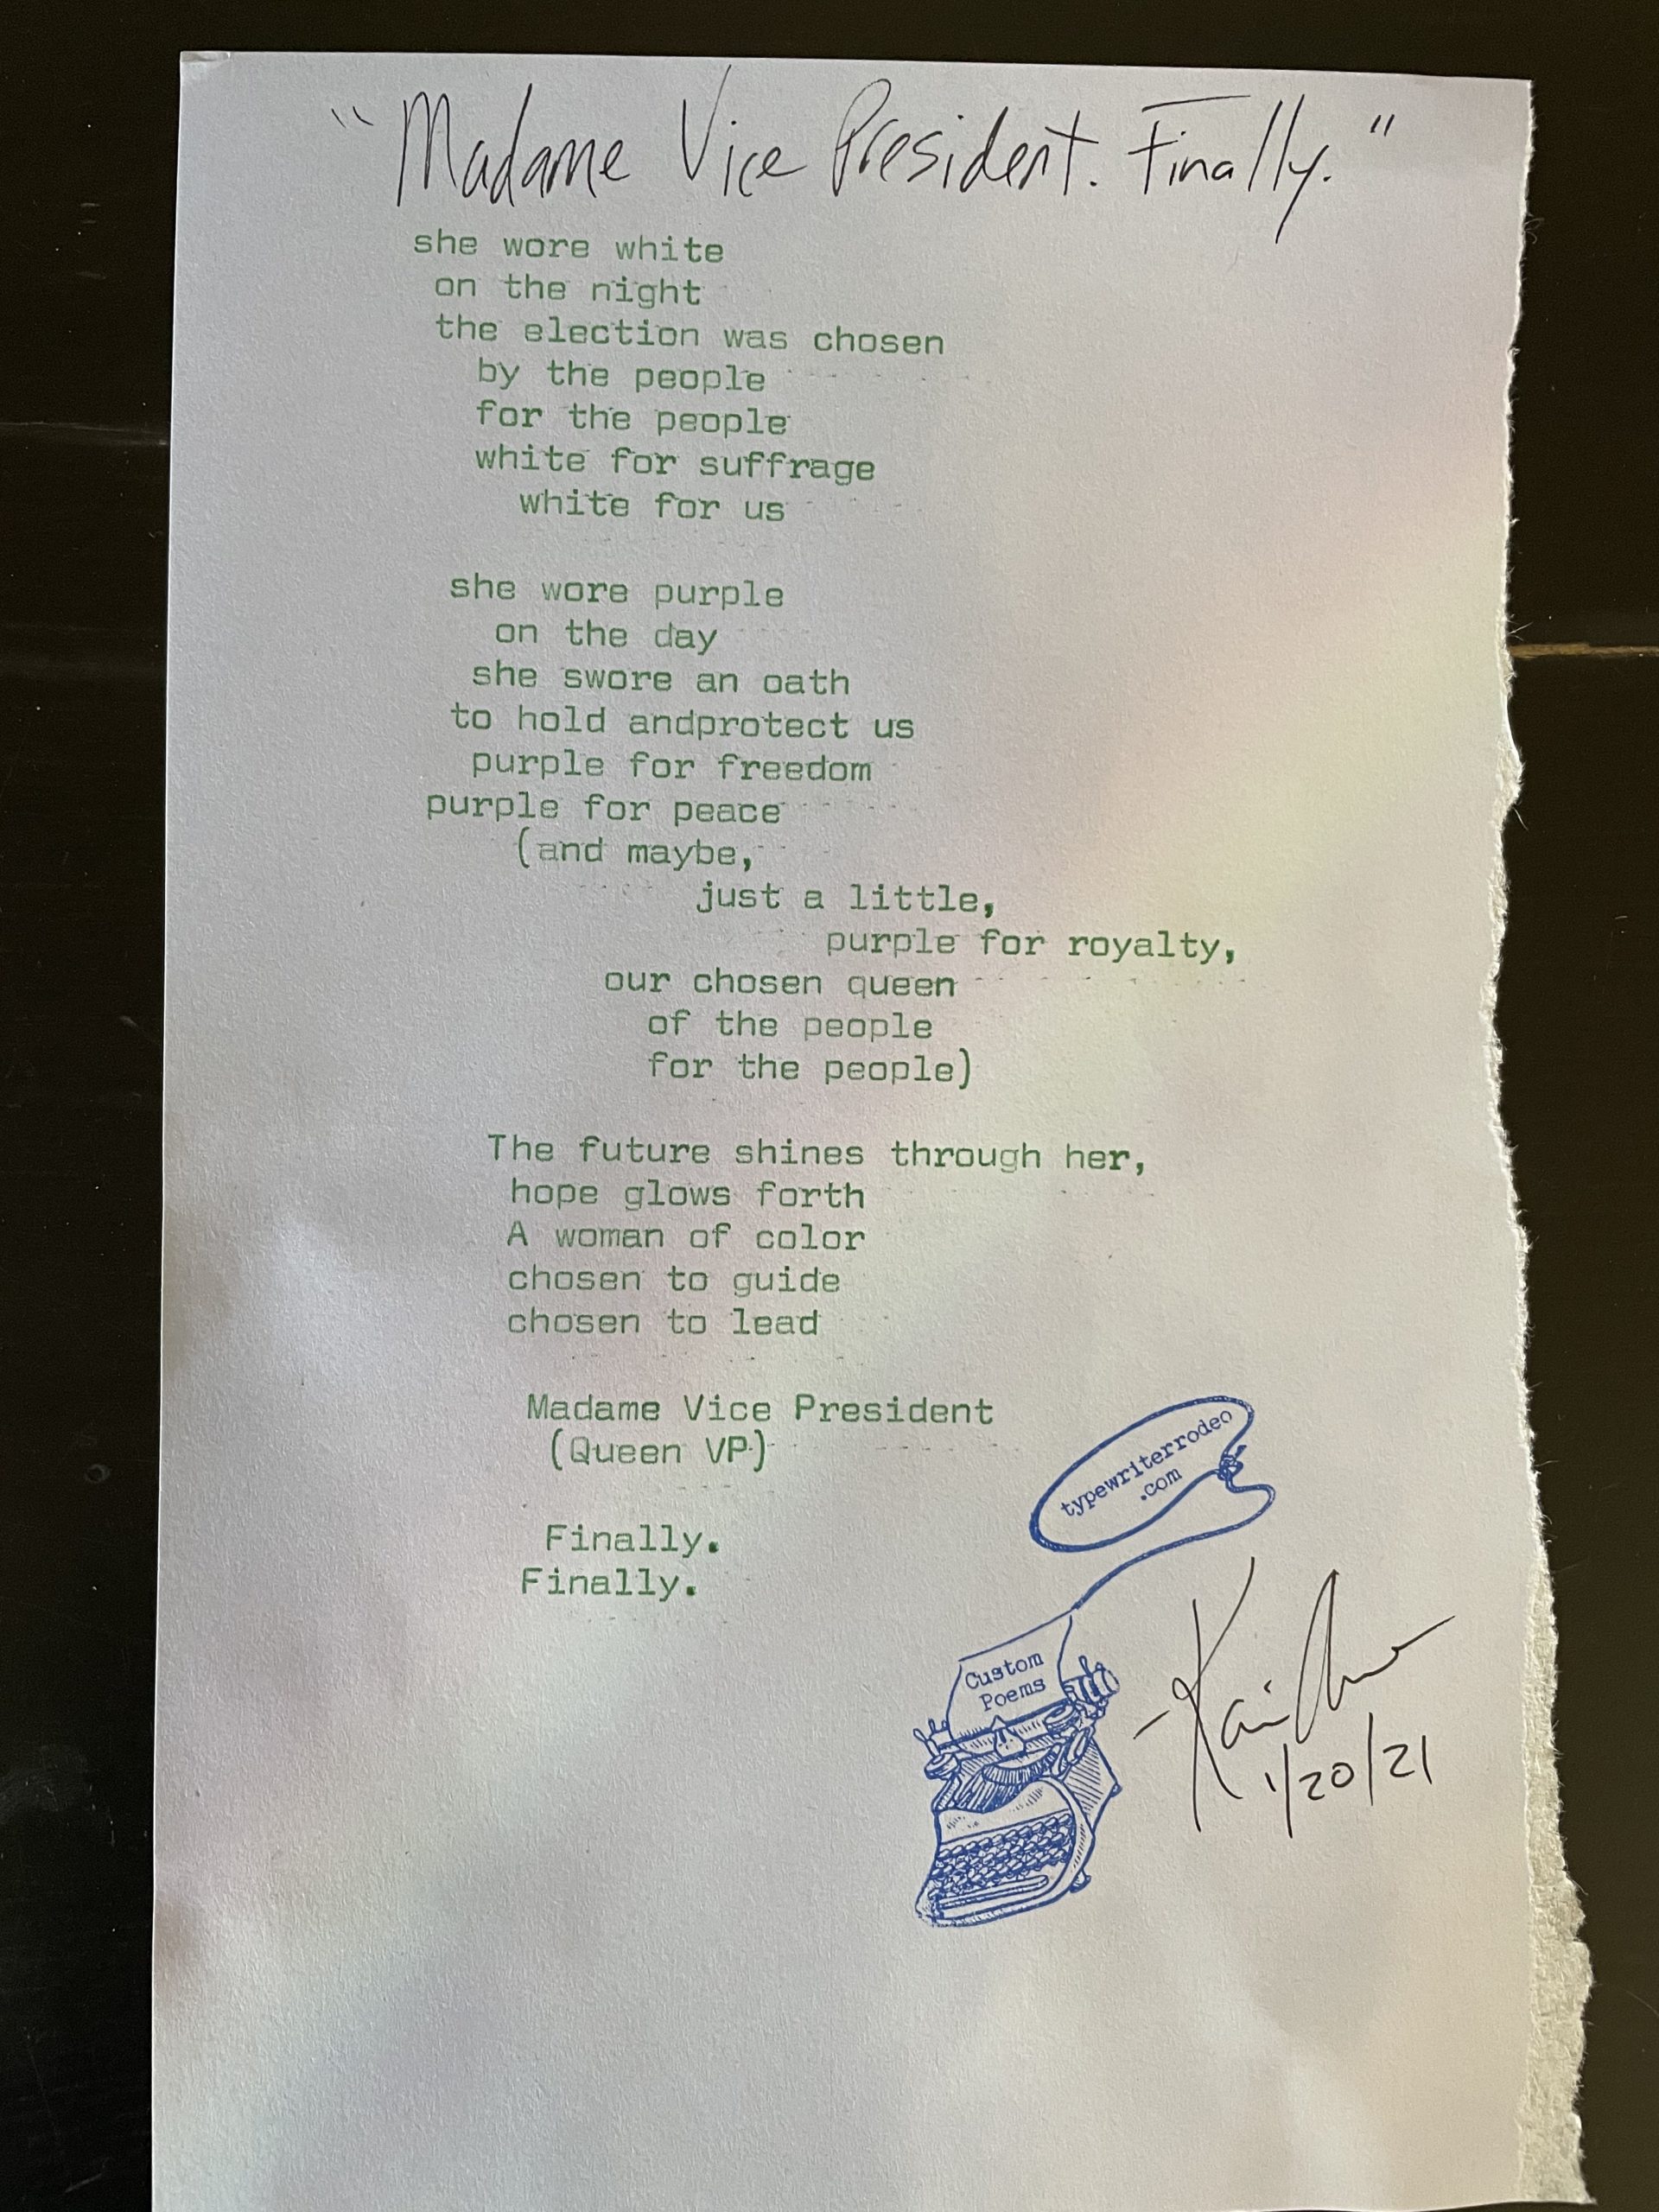 photo of typewritten poem